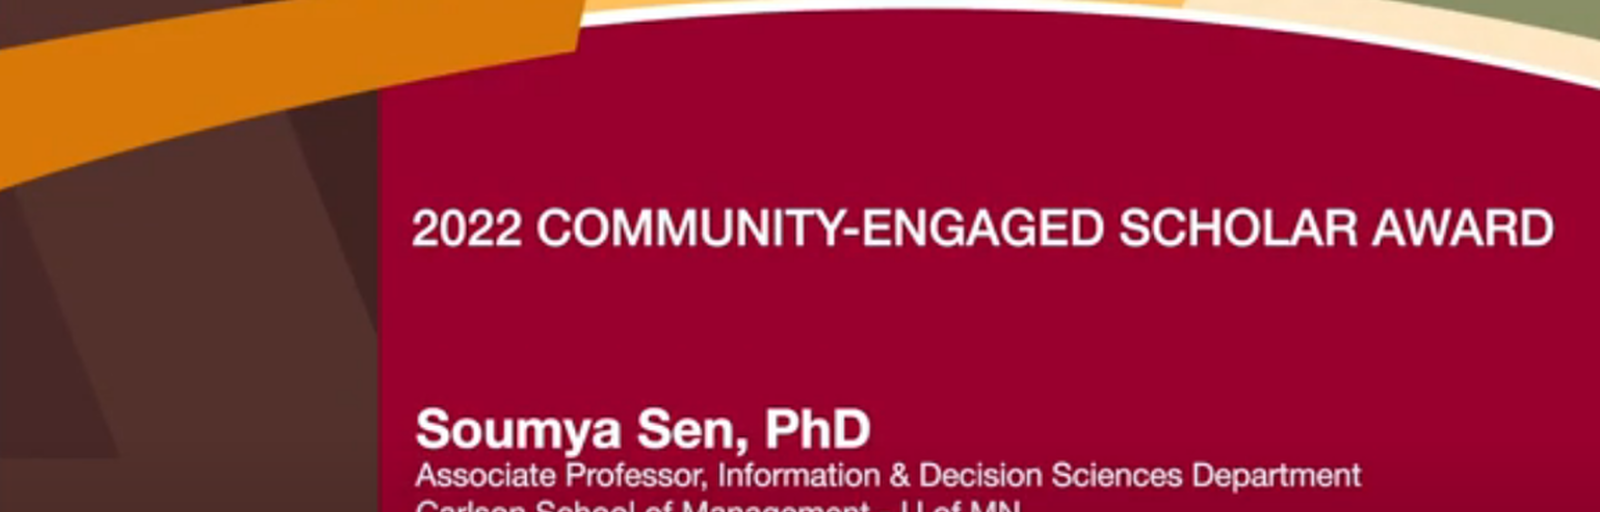 U of M 2022 Community-Engaged Scholar Award: Associate Professor Soumya Sen